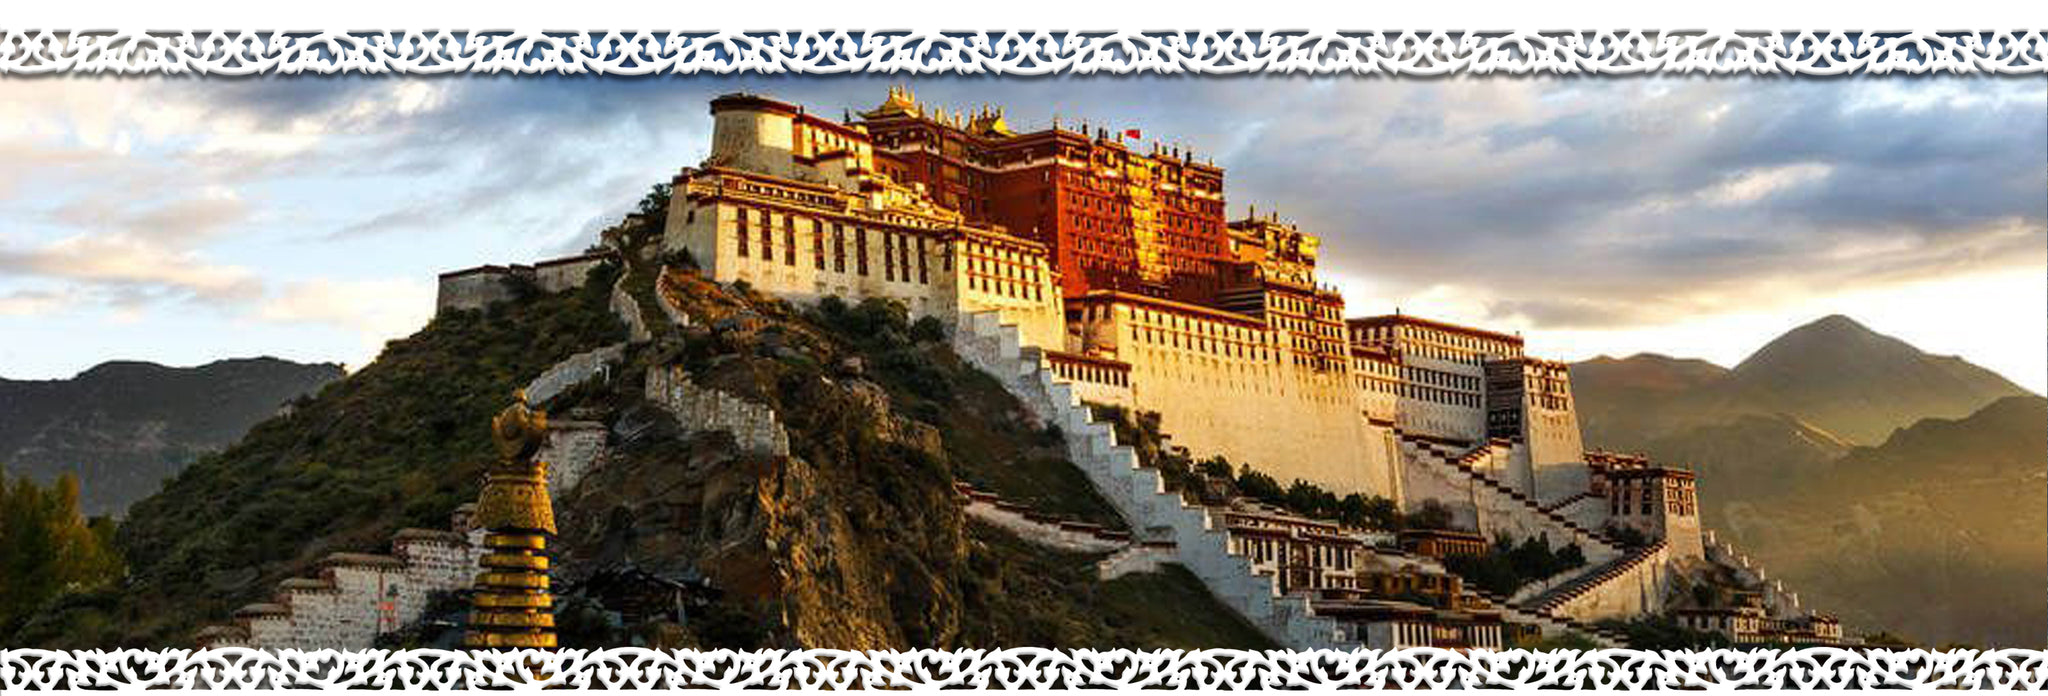 alexanderlawnde Tibet Collection Image